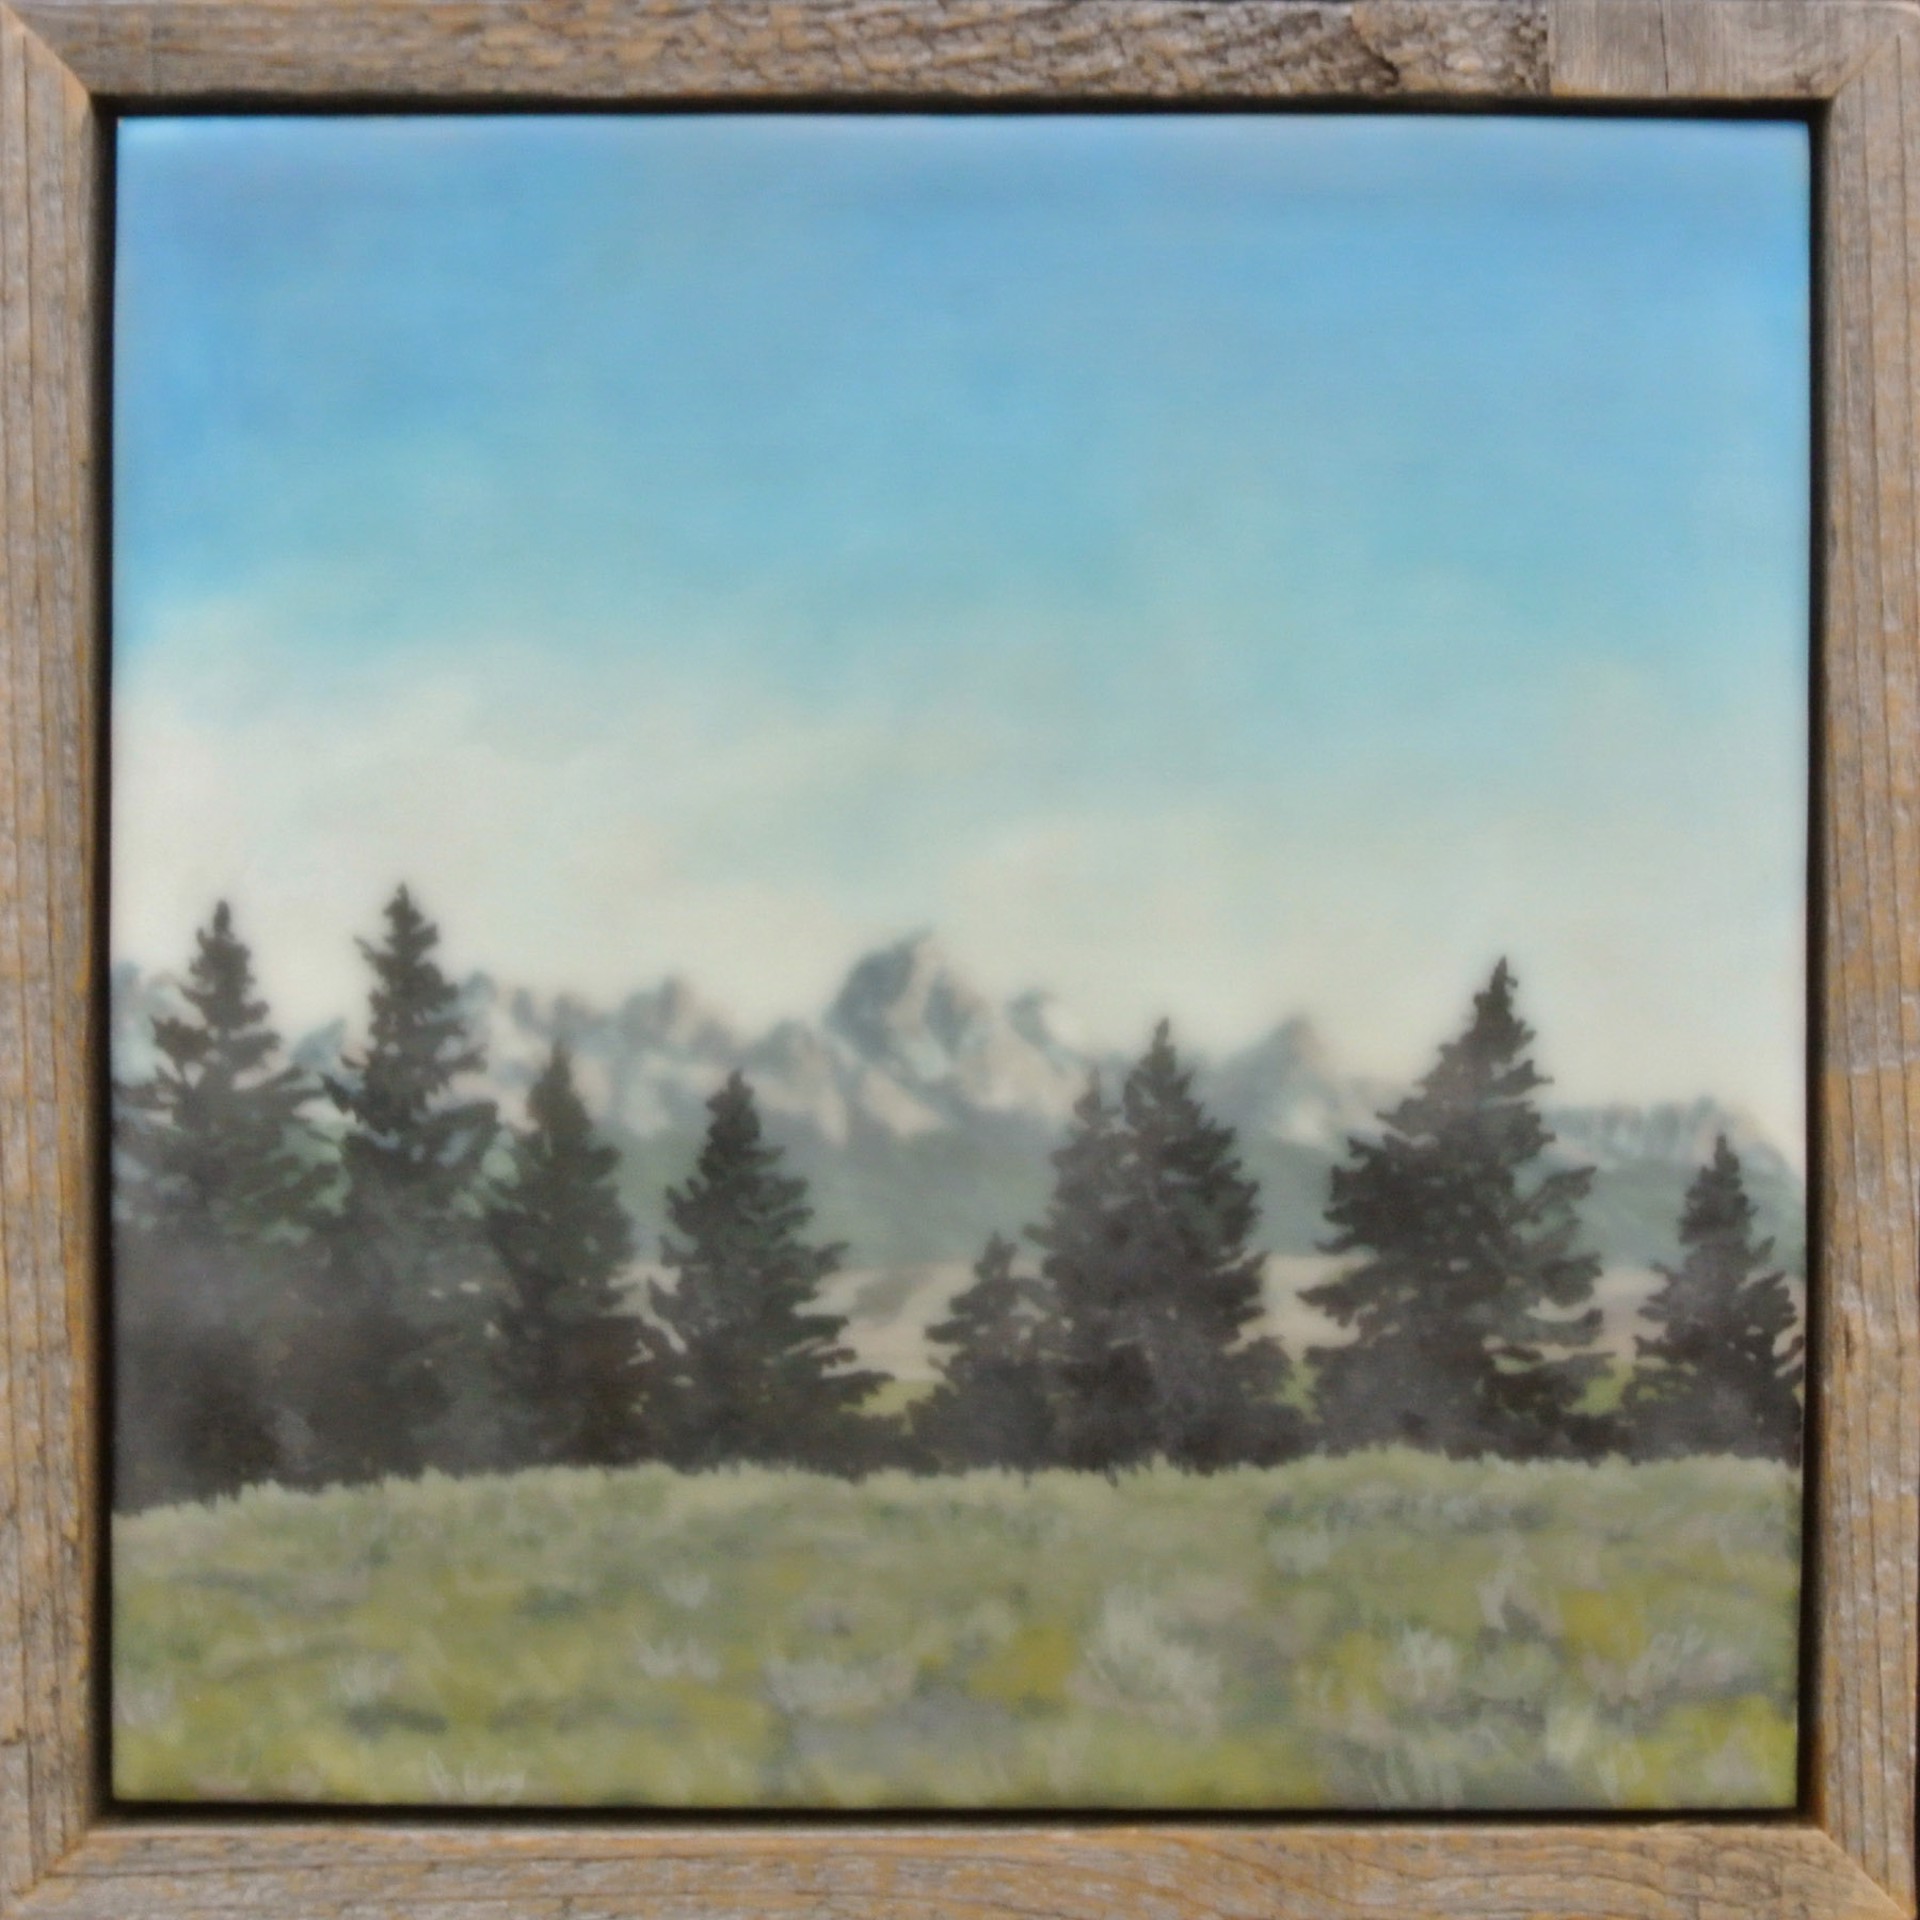 An Original Encaustic Painting Of The Teton Mountain Range And Valley Below, By Bridgette Meinhold